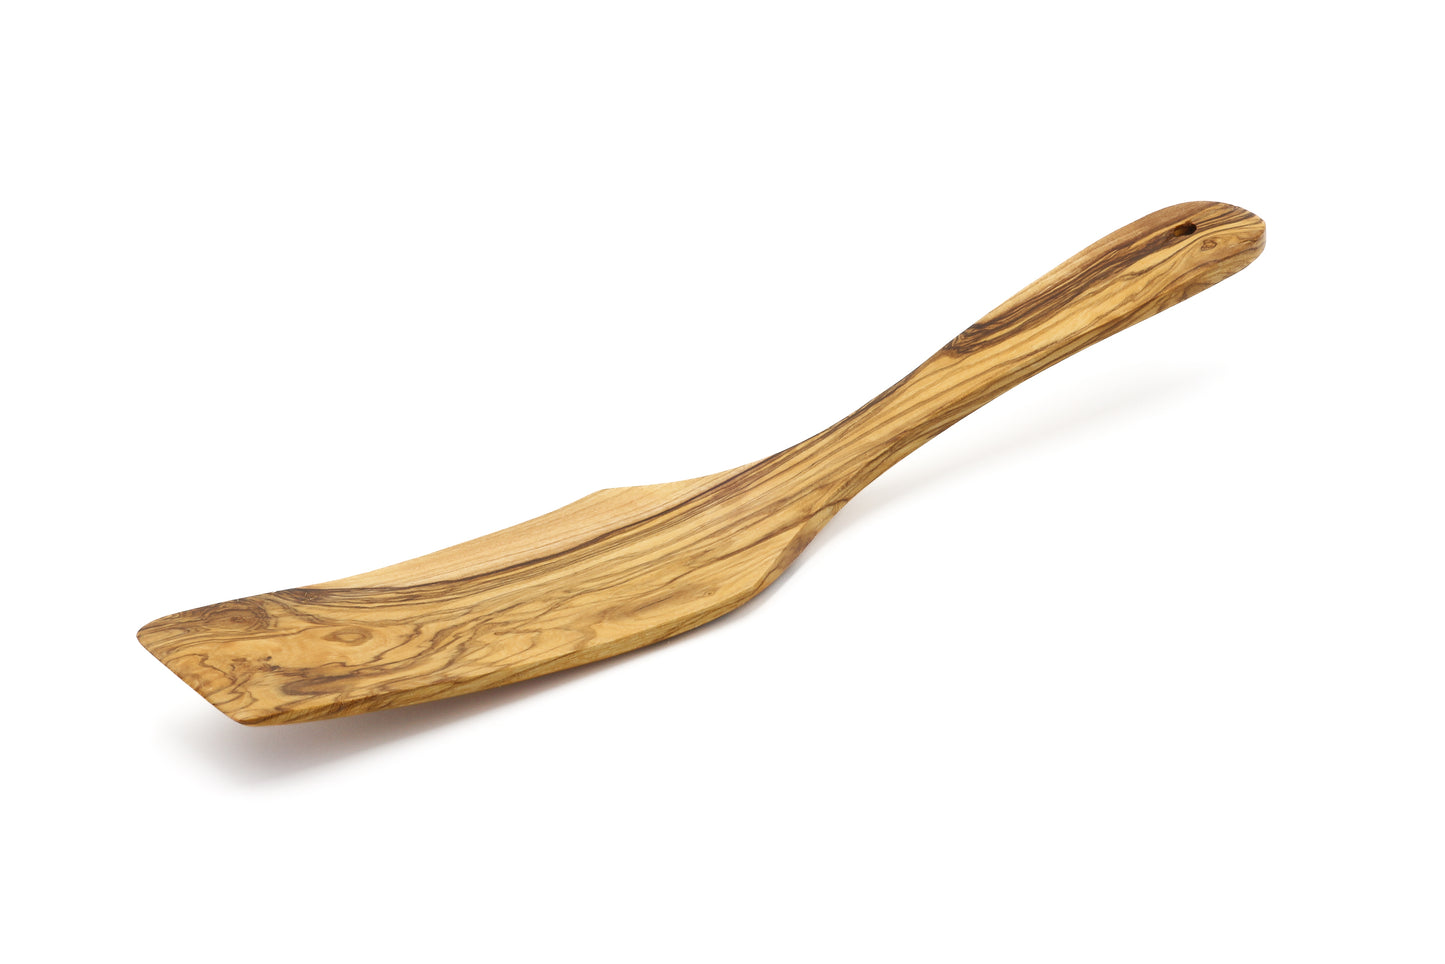 Artisan-made pan flipper in beautiful olive wood